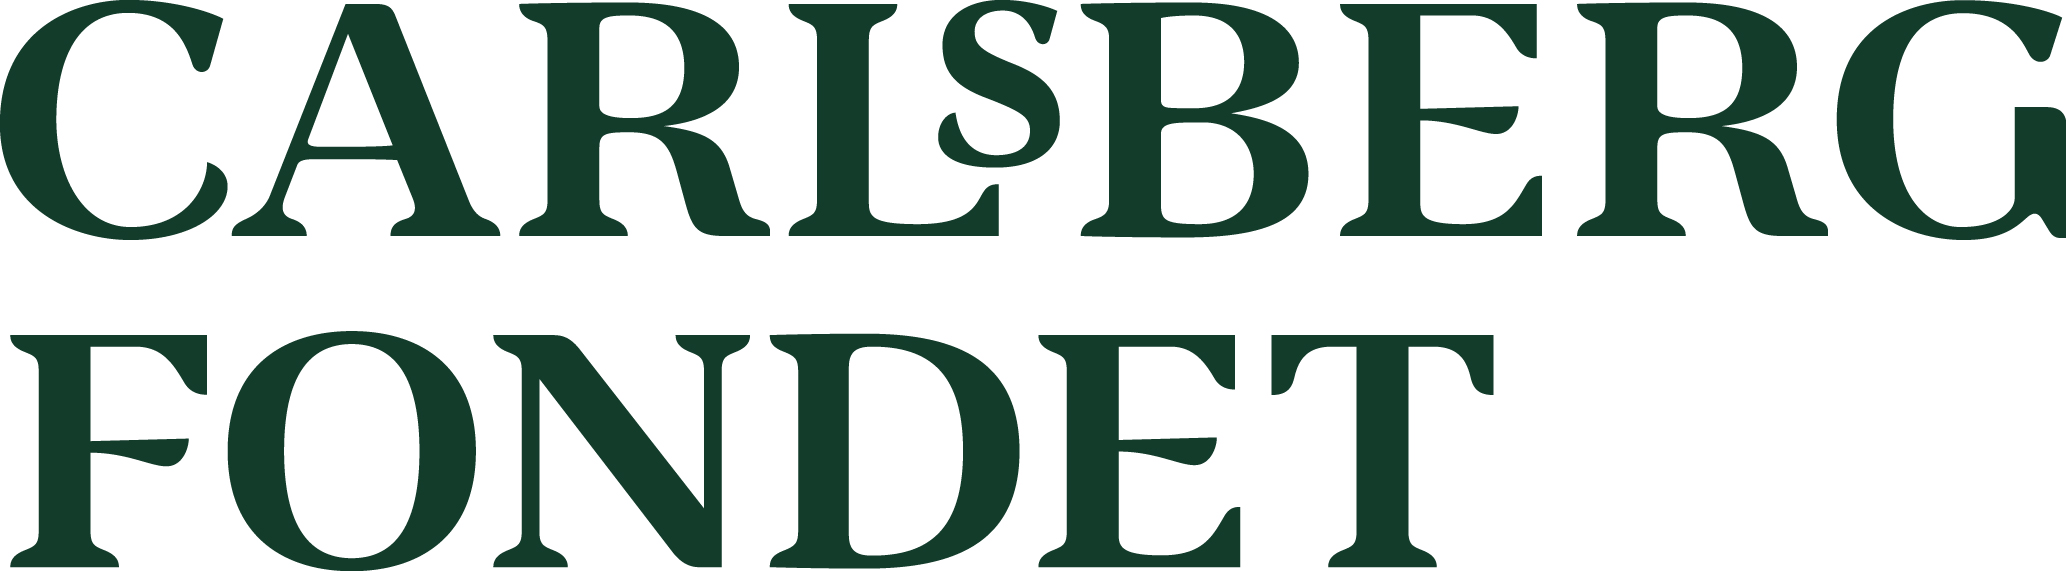 Carlsbergfondet logo